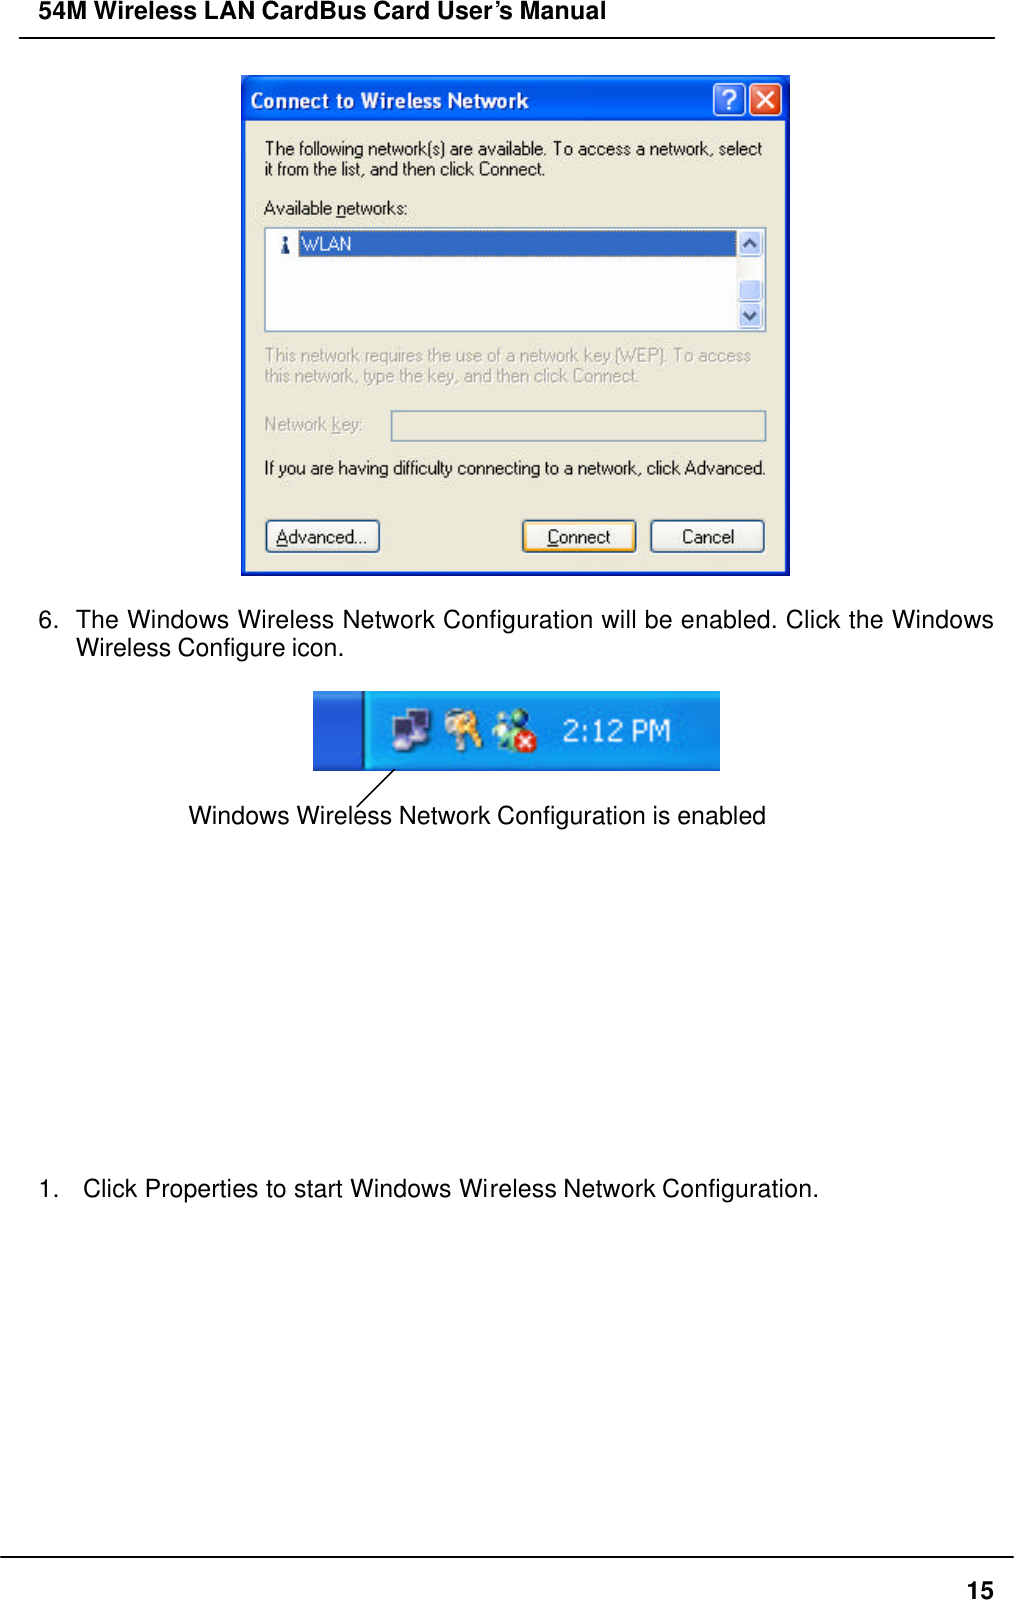 54M Wireless LAN CardBus Card User’s Manual  15   6. The Windows Wireless Network Configuration will be enabled. Click the Windows Wireless Configure icon.    Windows Wireless Network Configuration is enabled             1.  Click Properties to start Windows Wireless Network Configuration.  